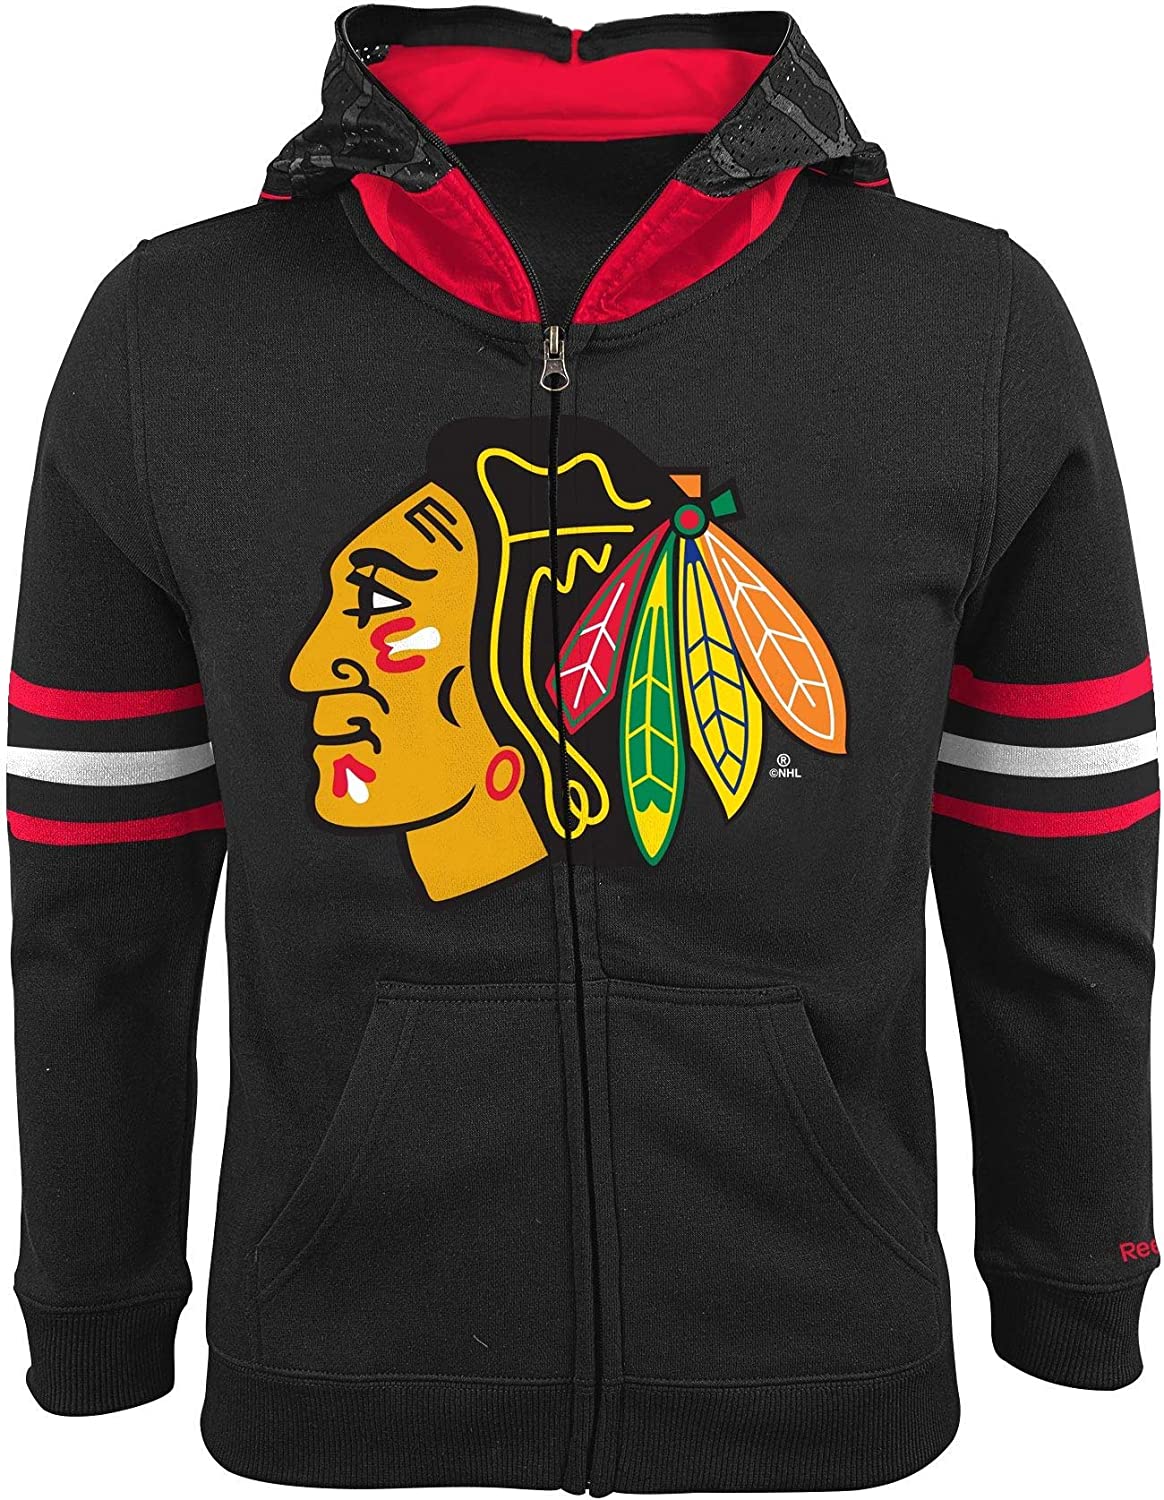 Chicago Blackhawks Youth NHL Reebok "Goalie Mask" Full Zip Sweatshirt